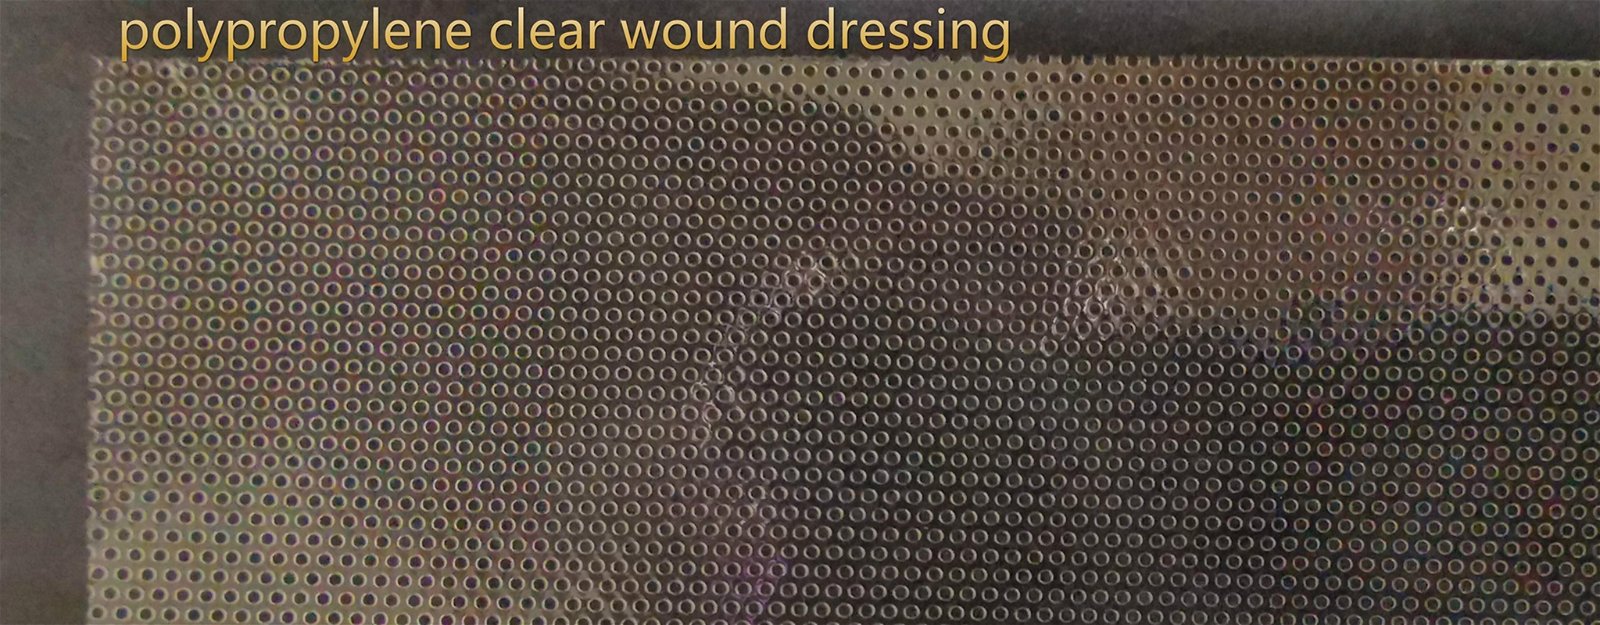 Polypropylene clear wound dressing